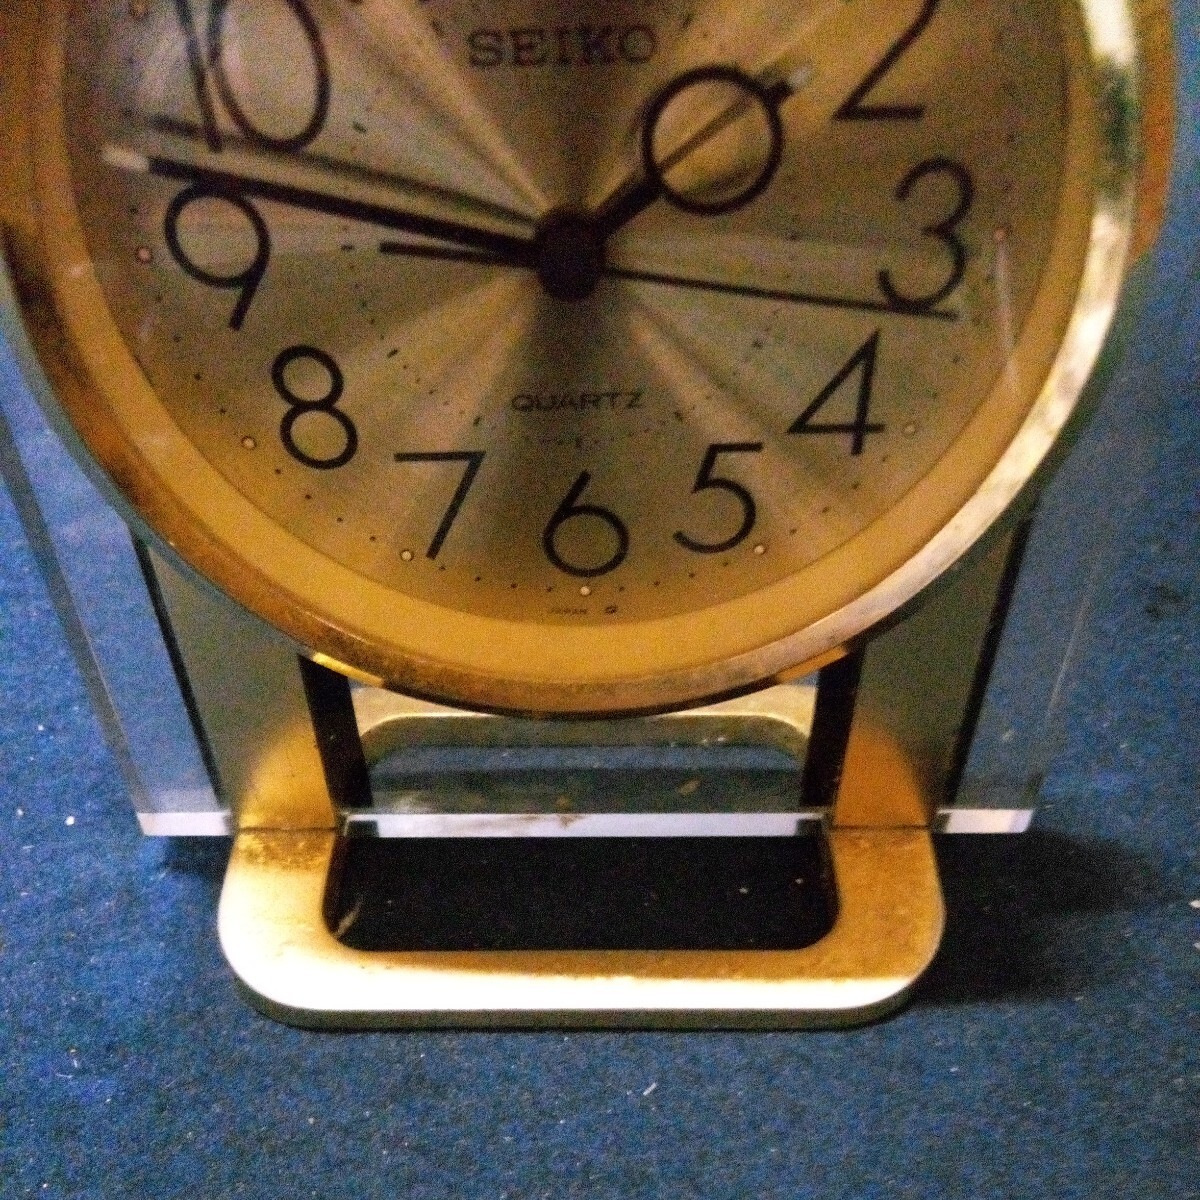 SEIKO セイコー 置時計 目覚まし時計 卓上時計 「QP345D」 クォーツ アナログ 電池式 約13×11cm 厚さ約6cm 動作確認済み_画像3